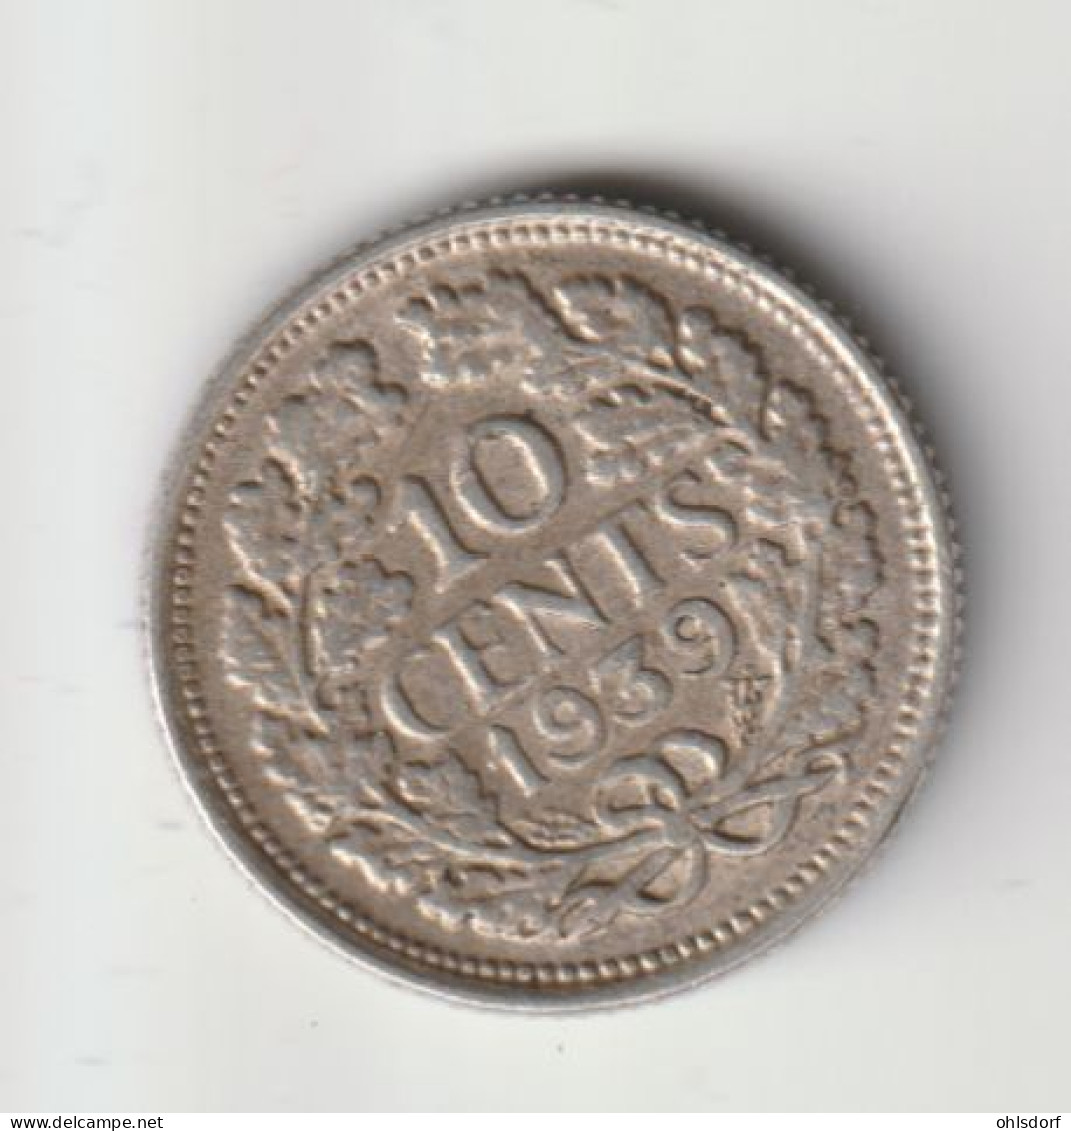 NEDERLAND 1939: 10 Cents, Silver, KM 164 - 10 Centavos